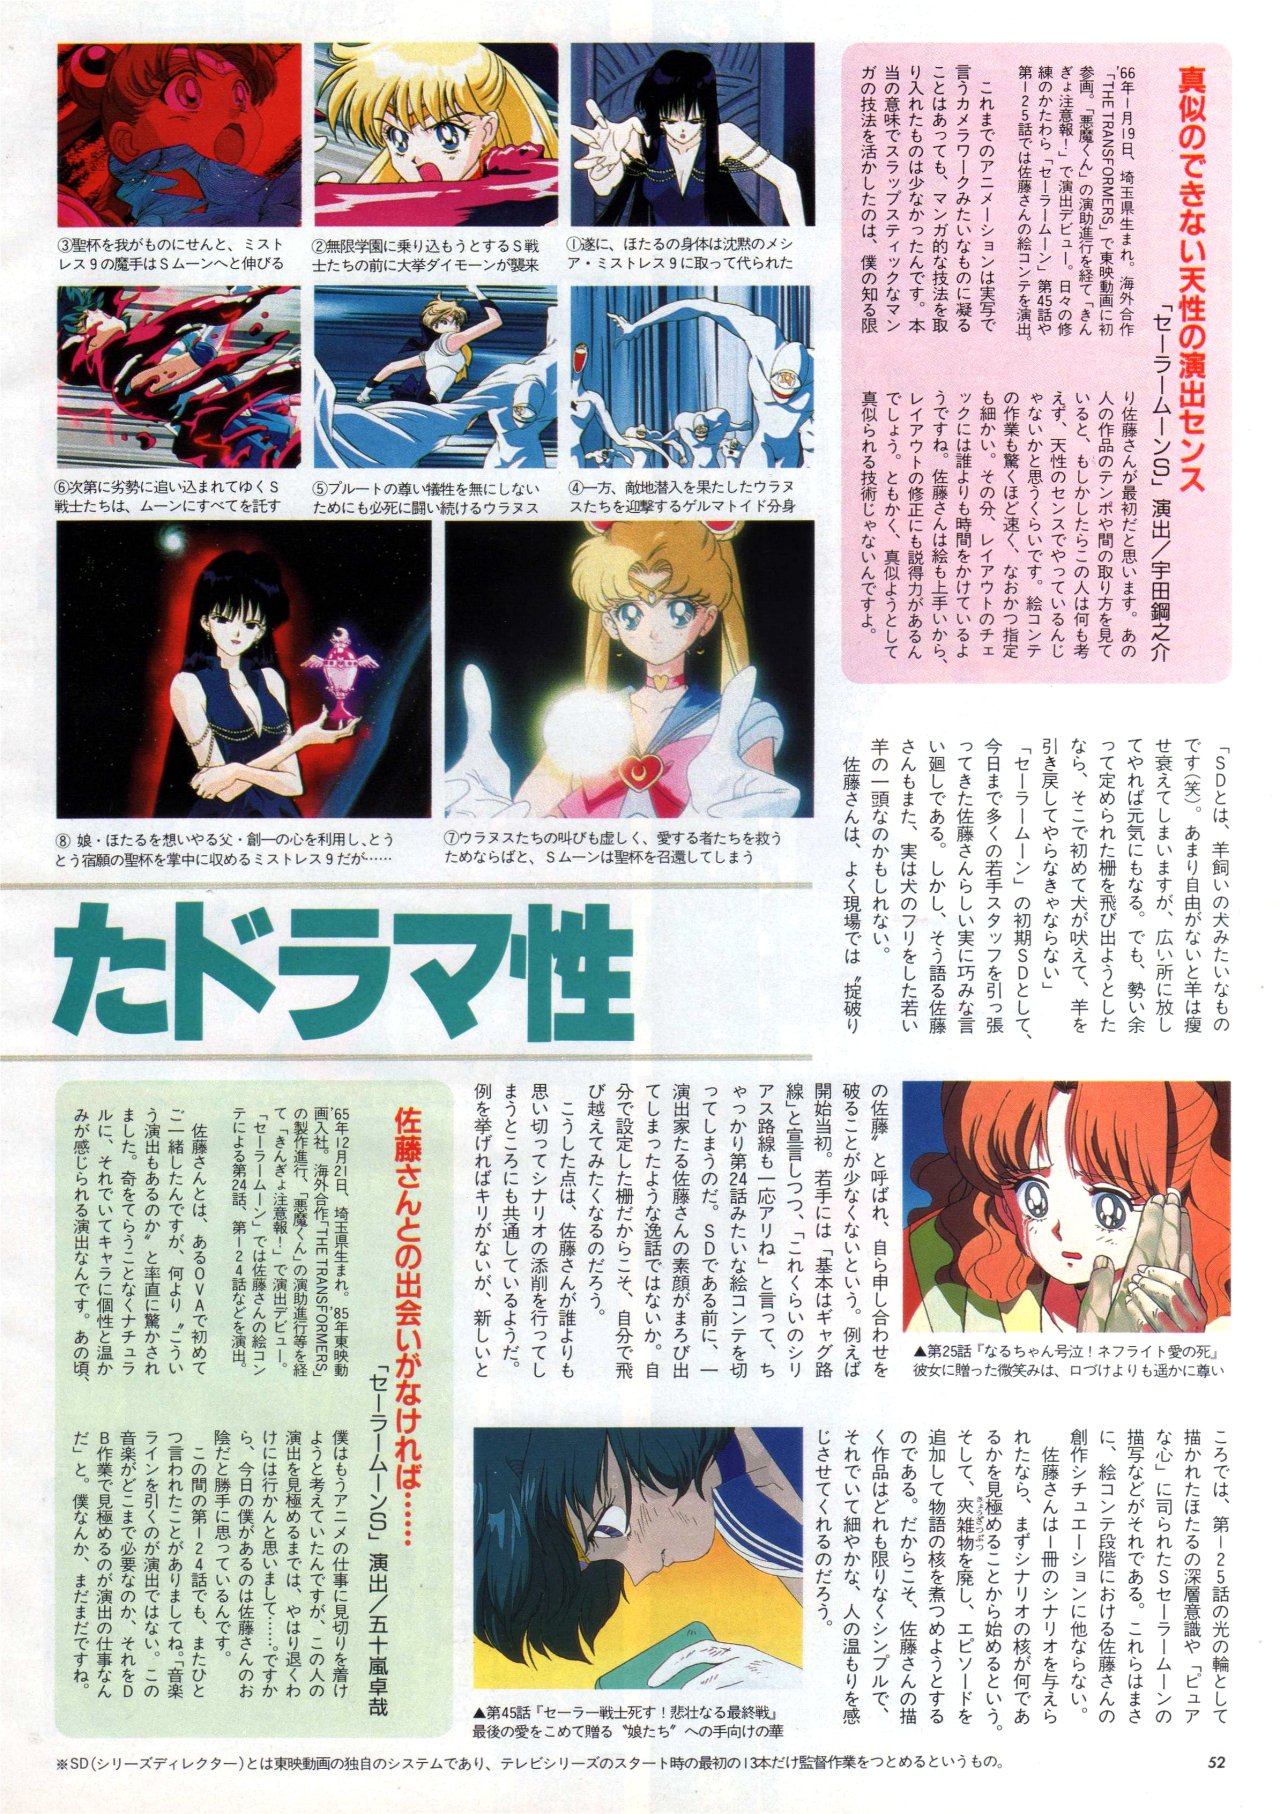 Animarchive Animage 04 1995 Sailor Moon S T Co Yfwcqs3lz1